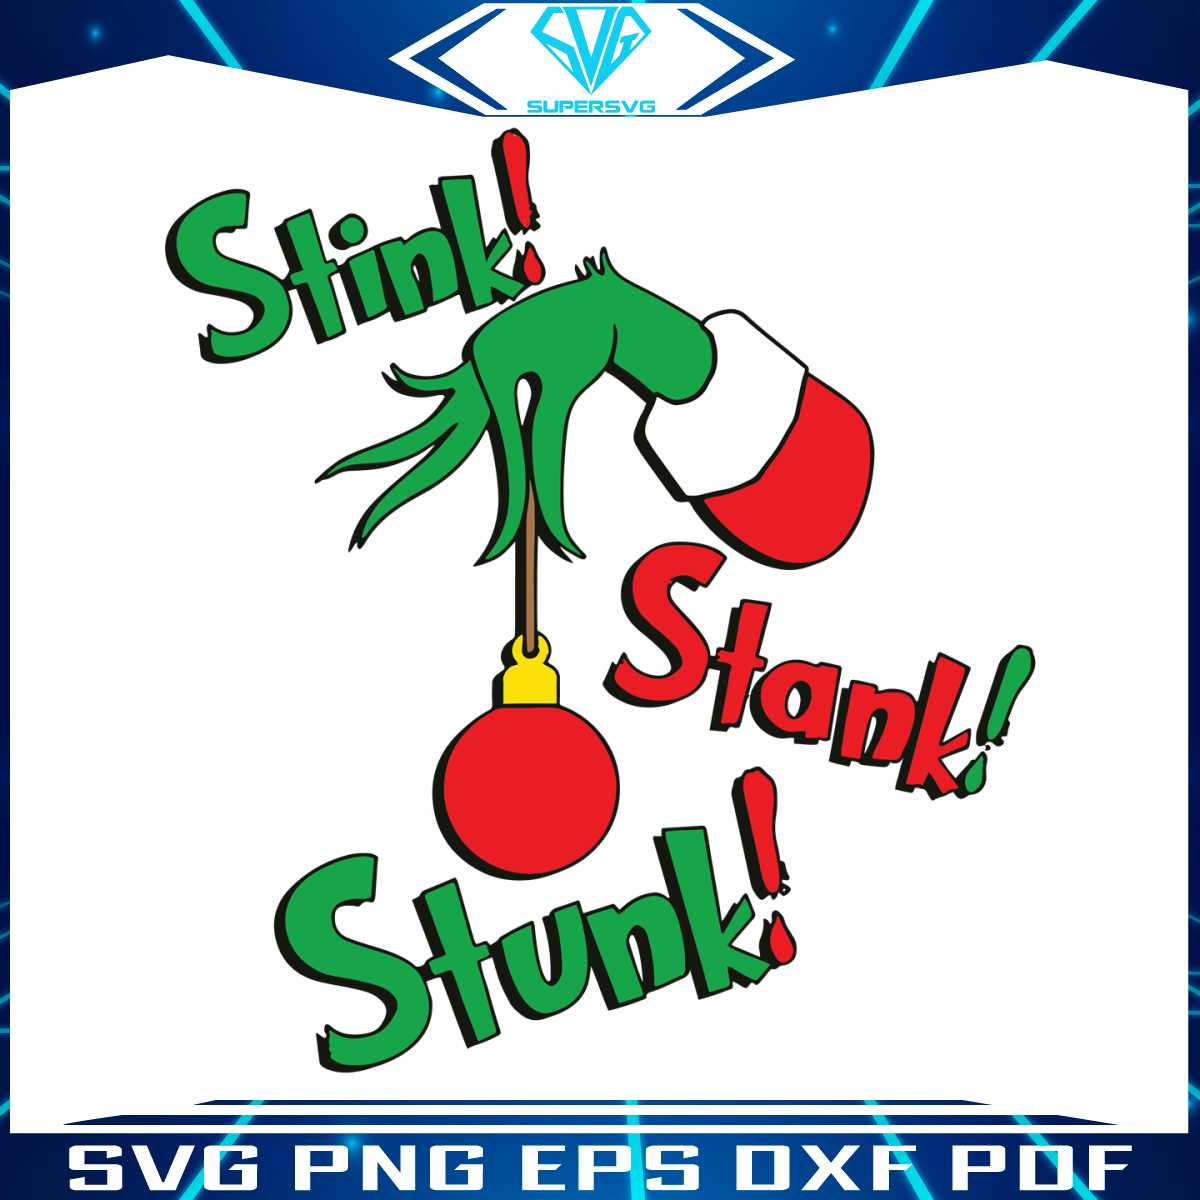 retro-grinch-stink-stank-stunk-svg-graphic-design-file